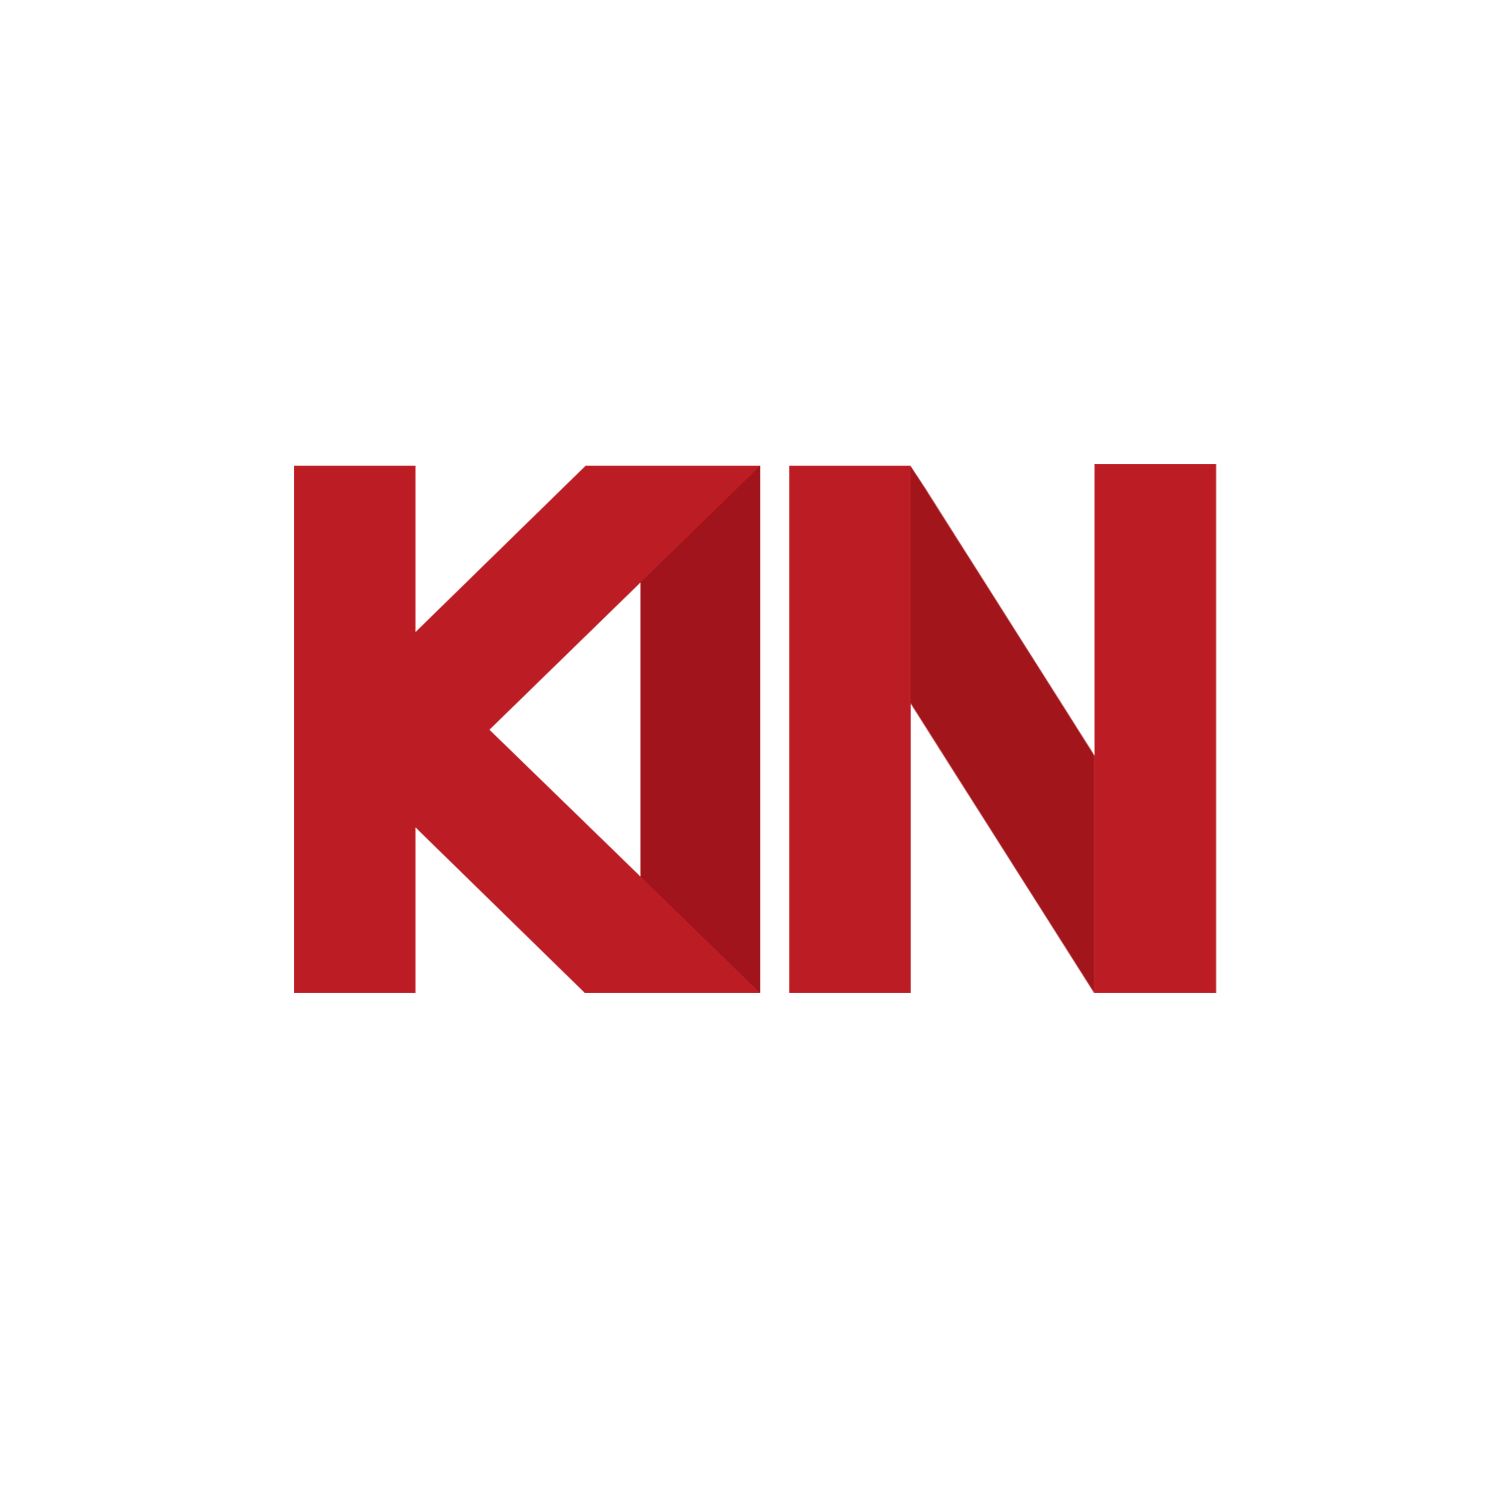 Kin Logo - Serious, Conservative Logo Design for Kin by OddLaww. Design